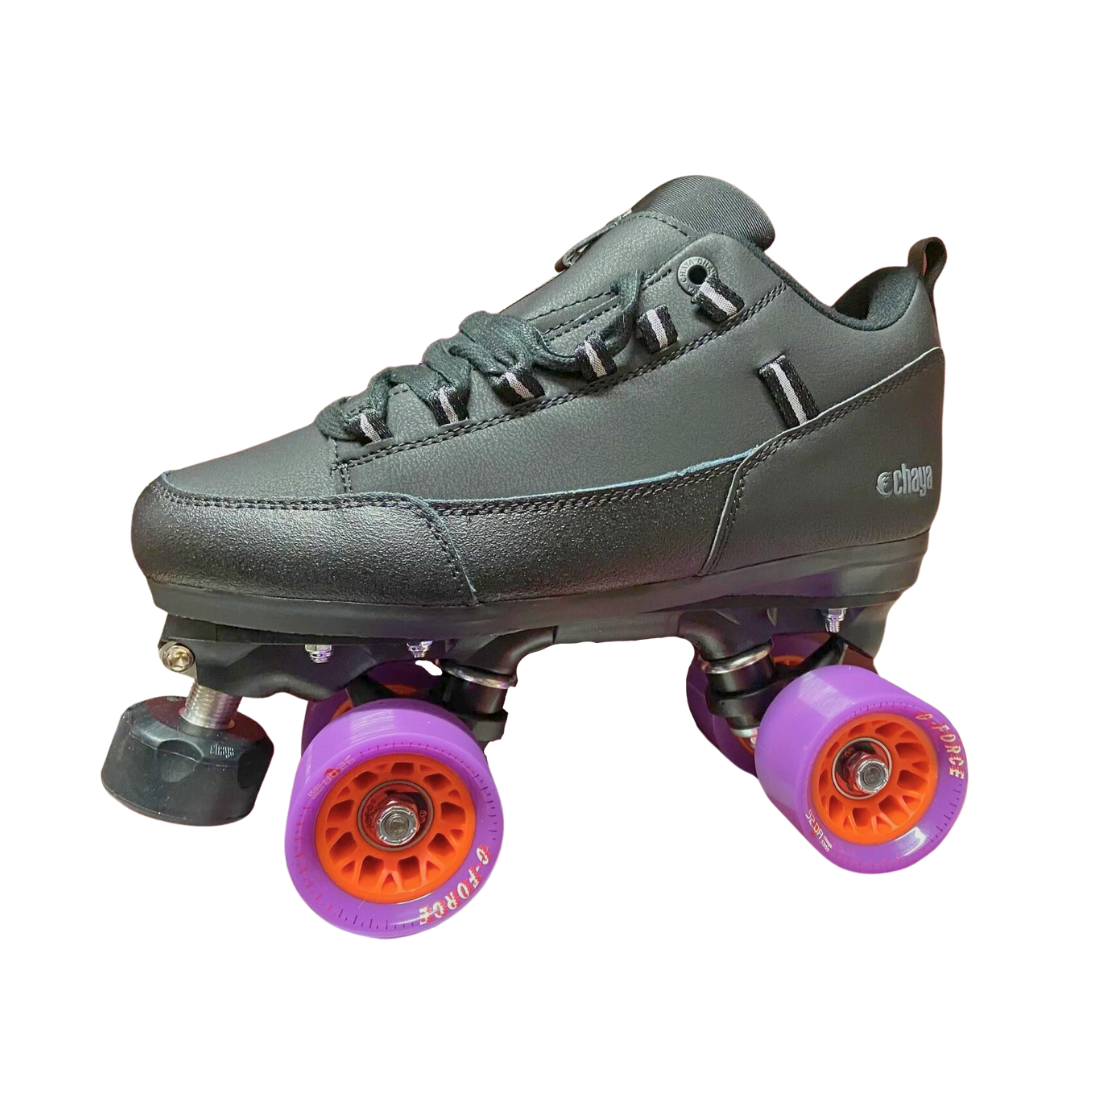 Chaya Ruby Skate - Black Roller Skates